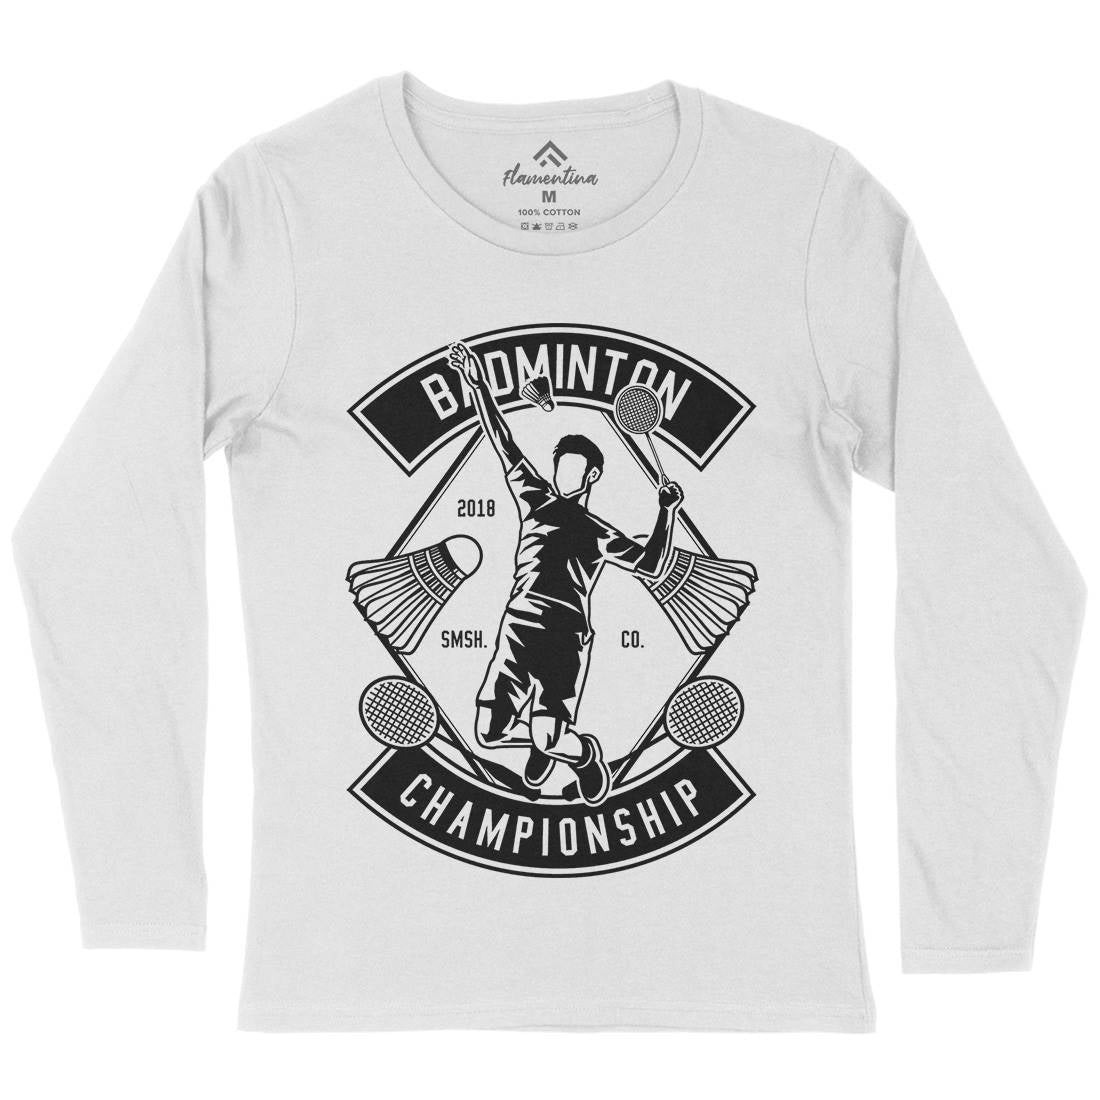 Badminton Championship Womens Long Sleeve T-Shirt Sport B486